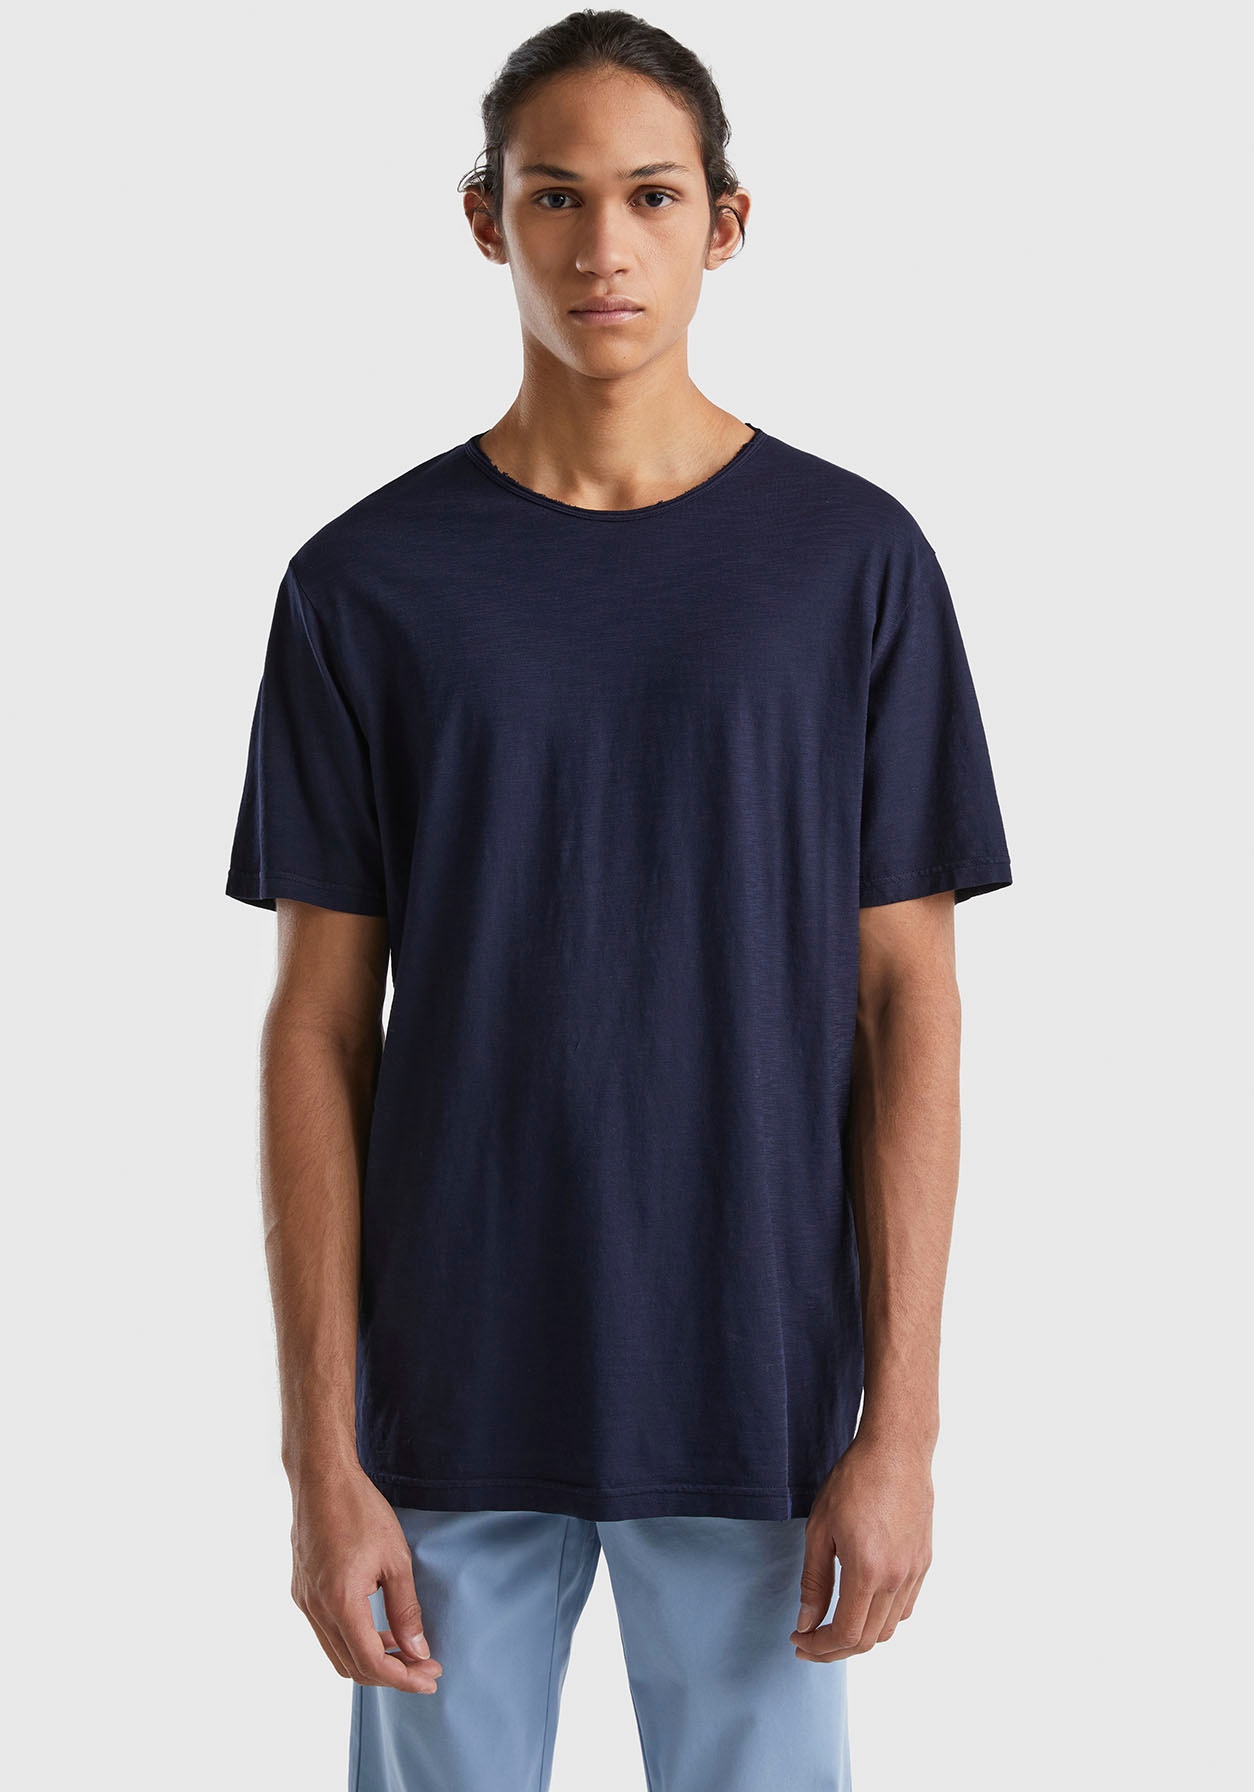 United Colors of Basic-Form gerader T-Shirt, online Benetton in OTTO bei bestellen